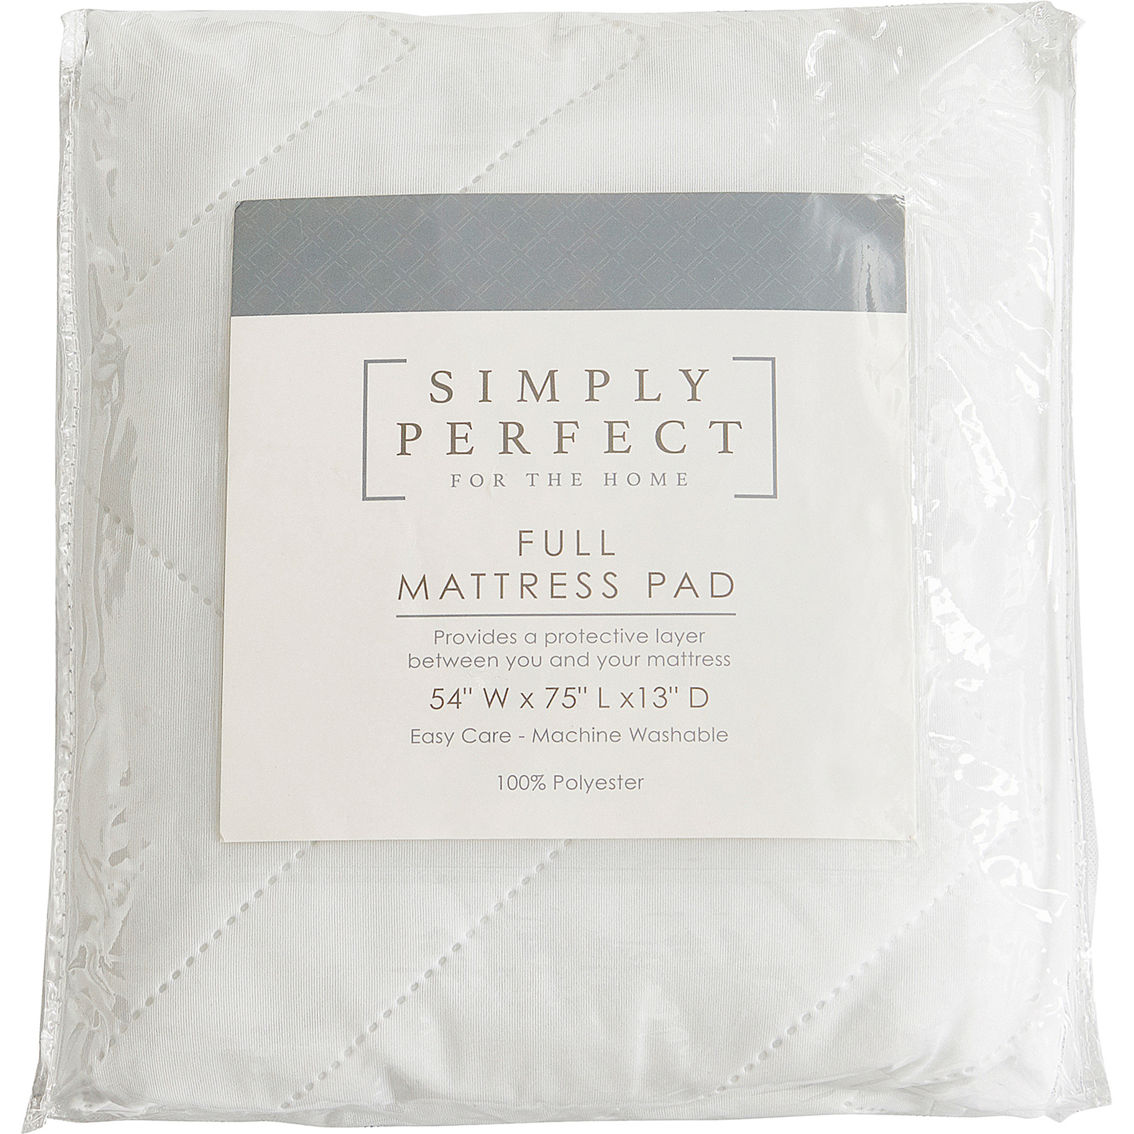 Simply Perfect Mattress Pad - Image 4 of 8